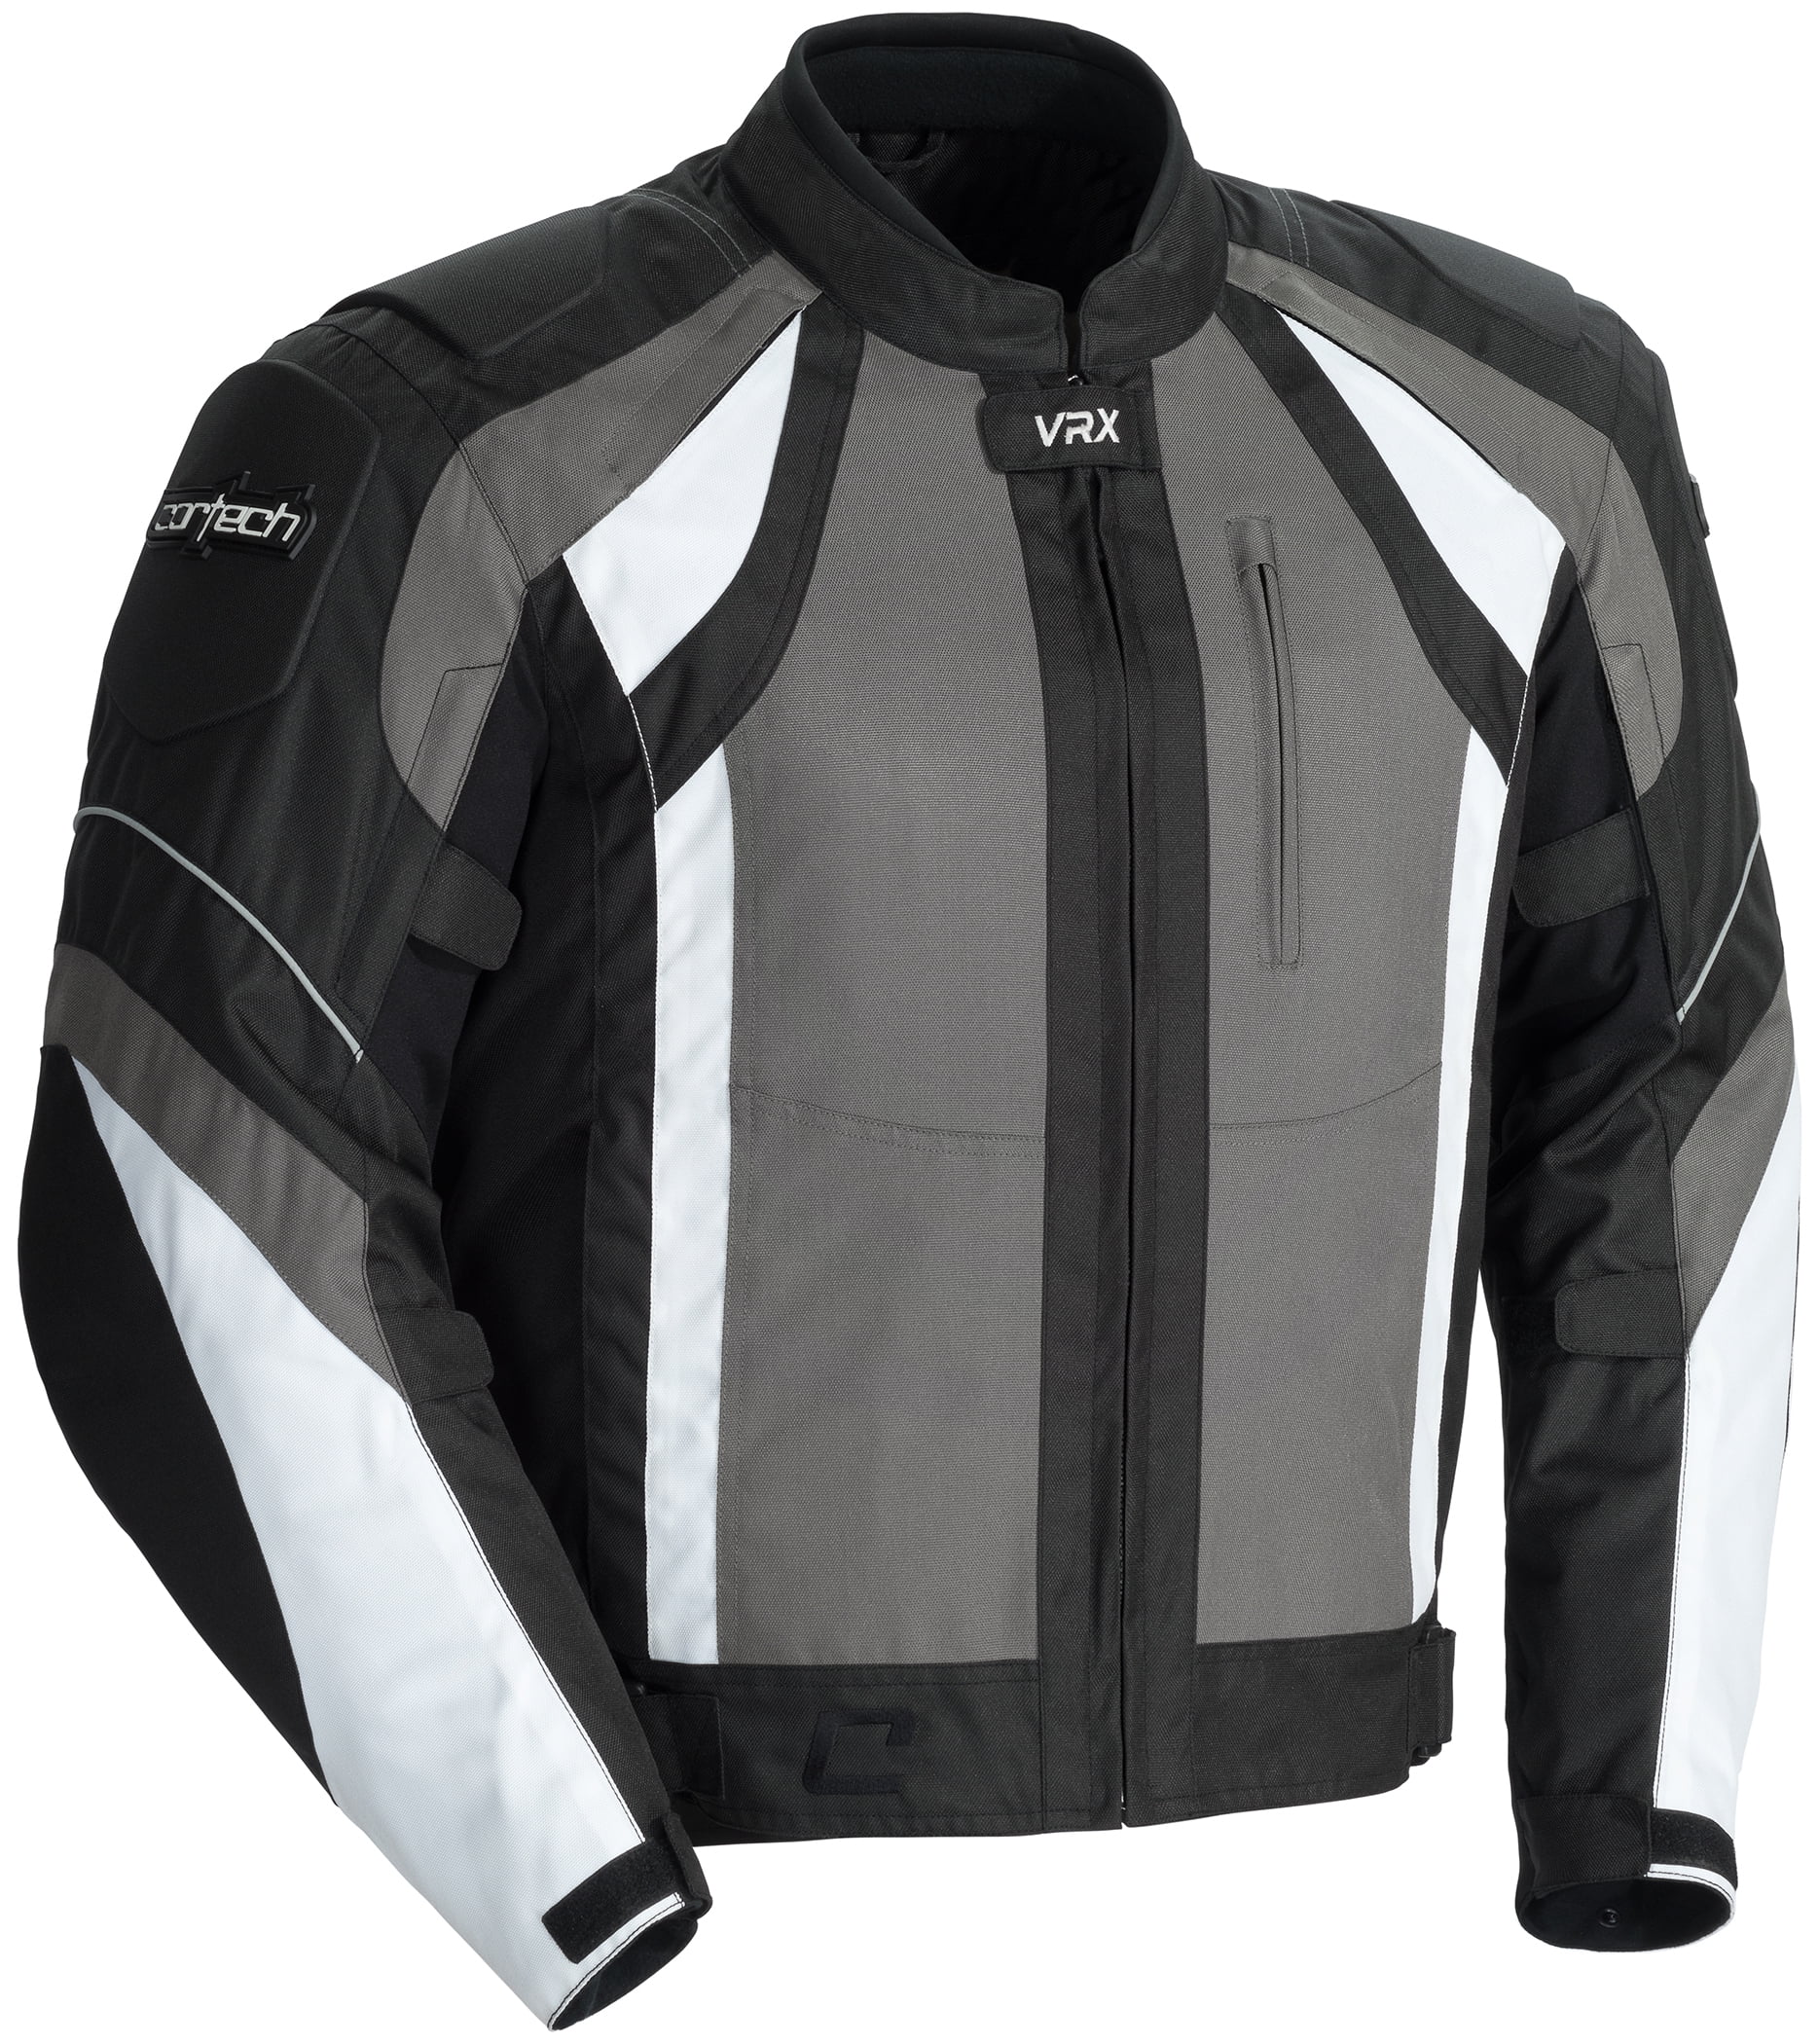 Cortech VRX Textile Jacket Black/Hi Viz LRG 8950-0113-06 - Walmart.com